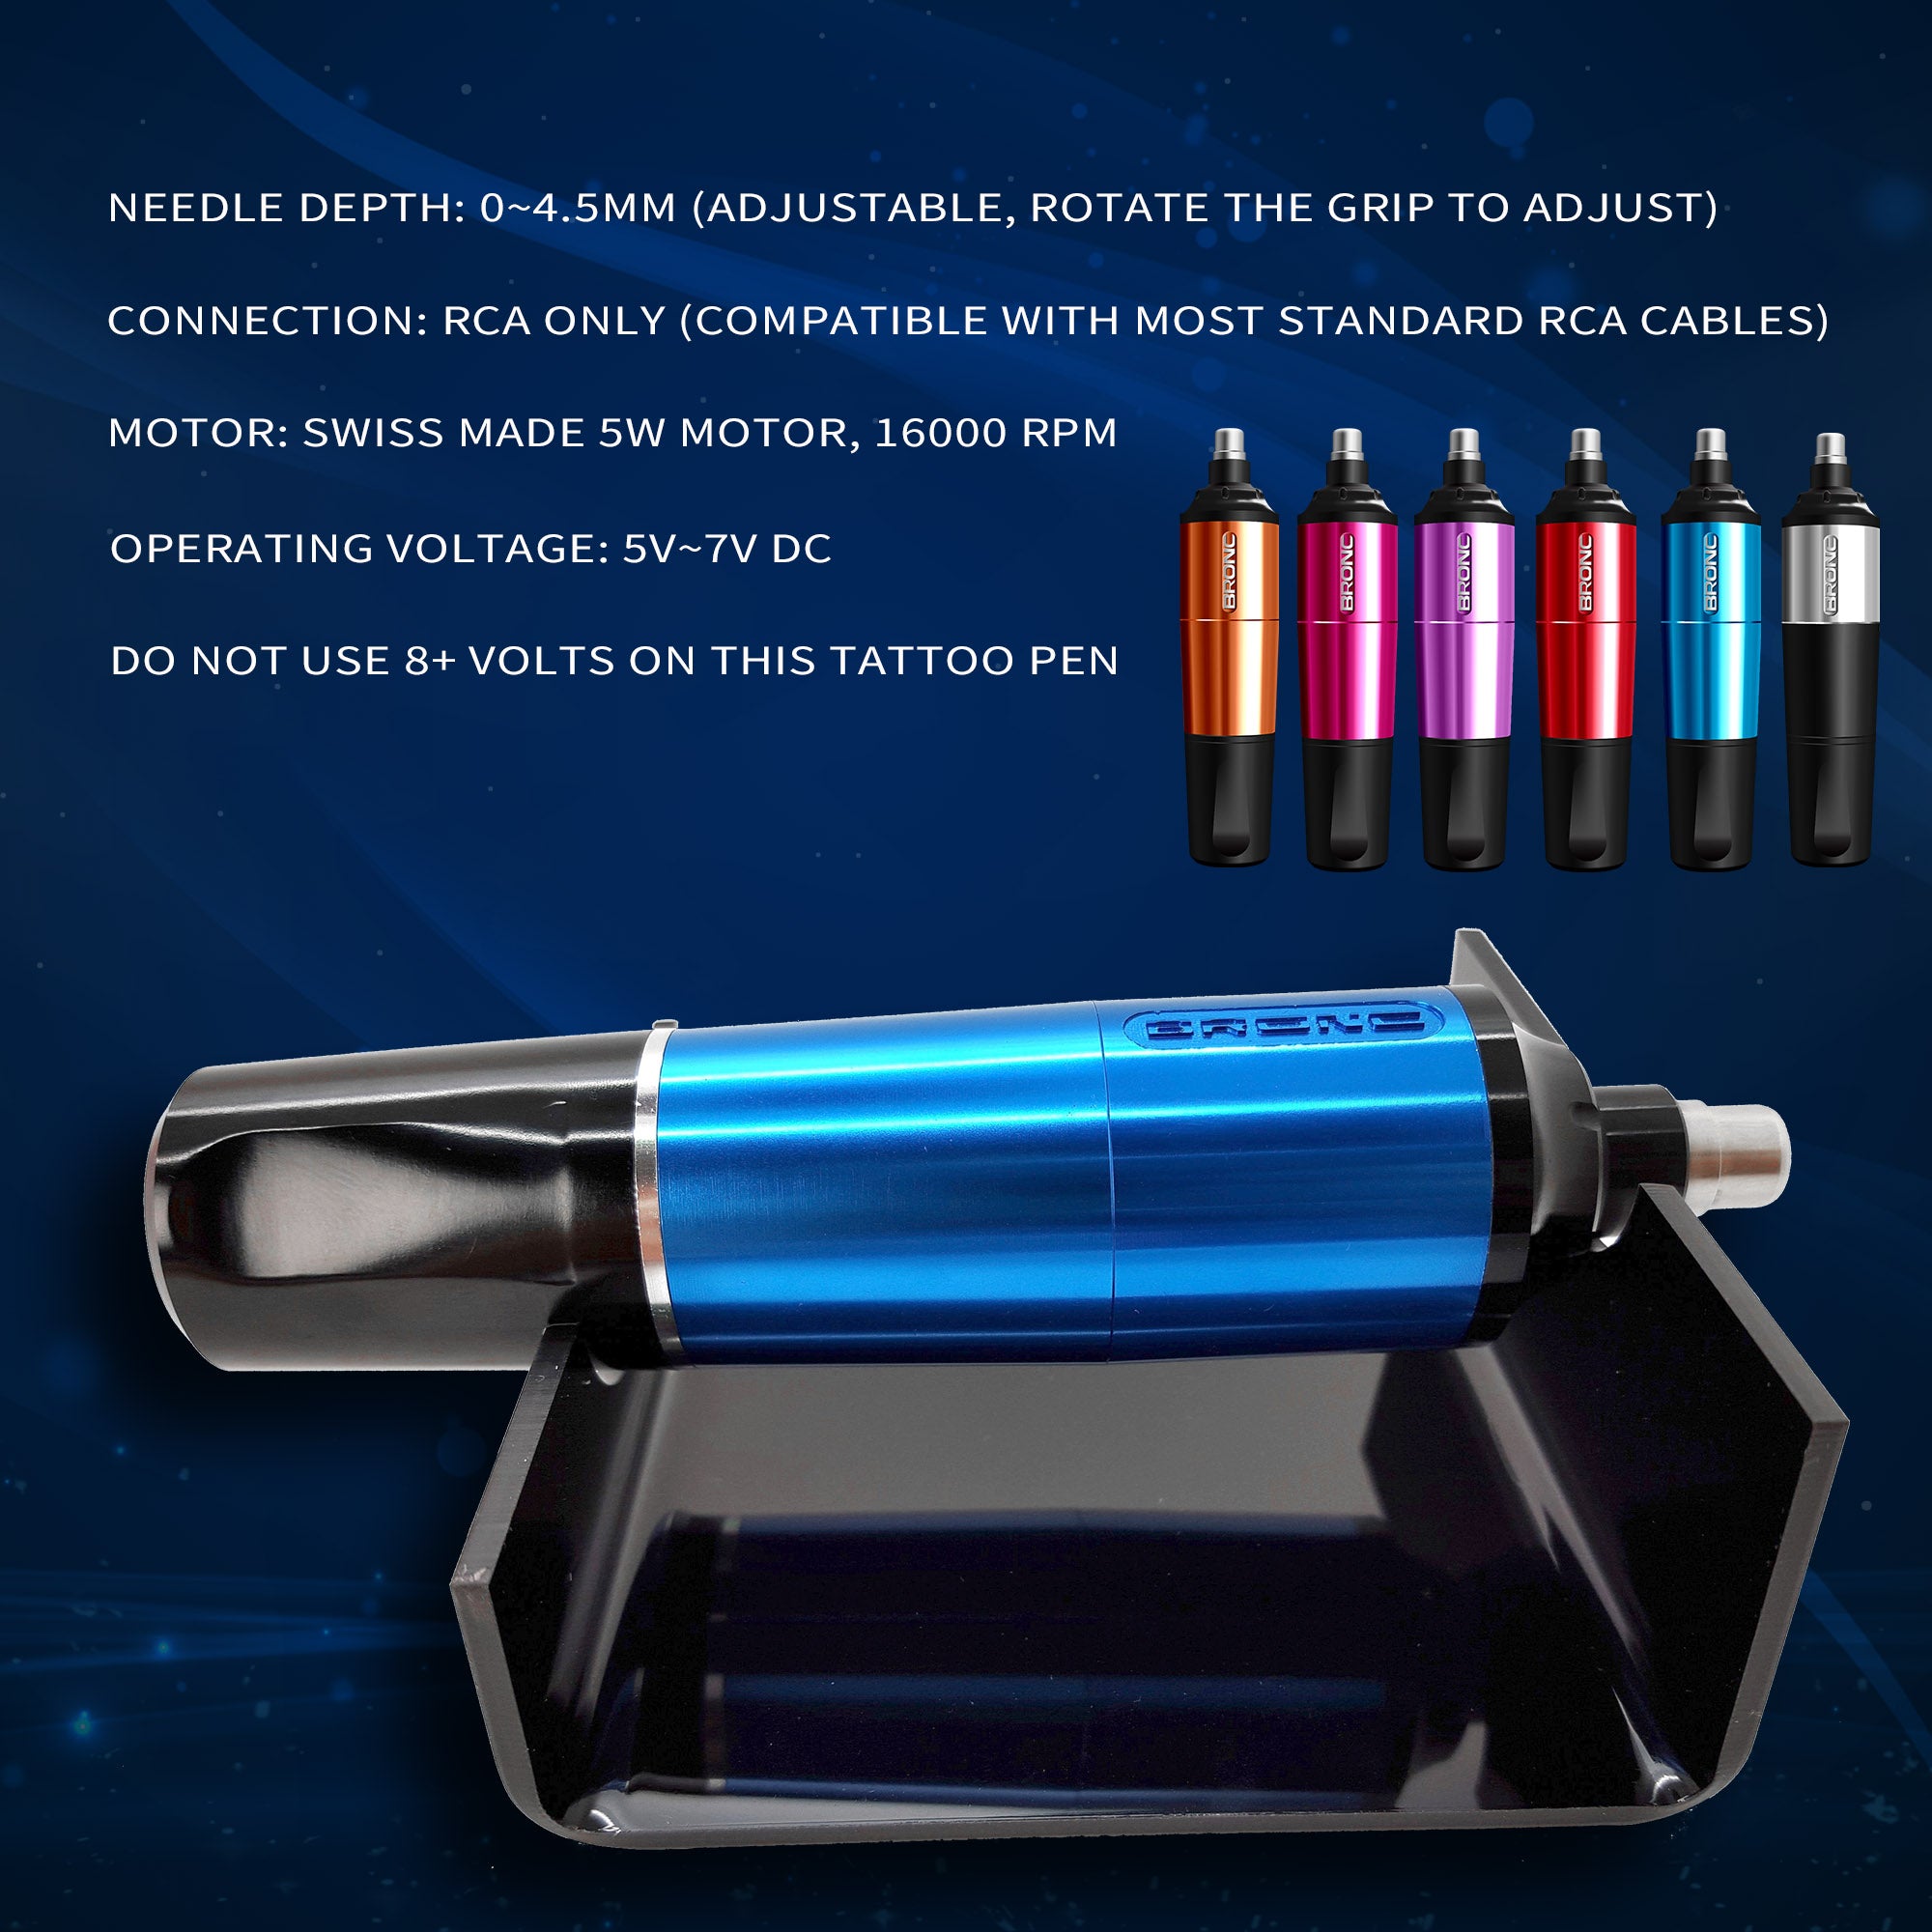 Hot Sale Professional Rocket Ii Tattoo Machine Pen With Light  Powerful  Japan Motor For Beginner Practice  Tattoo Kits  AliExpress